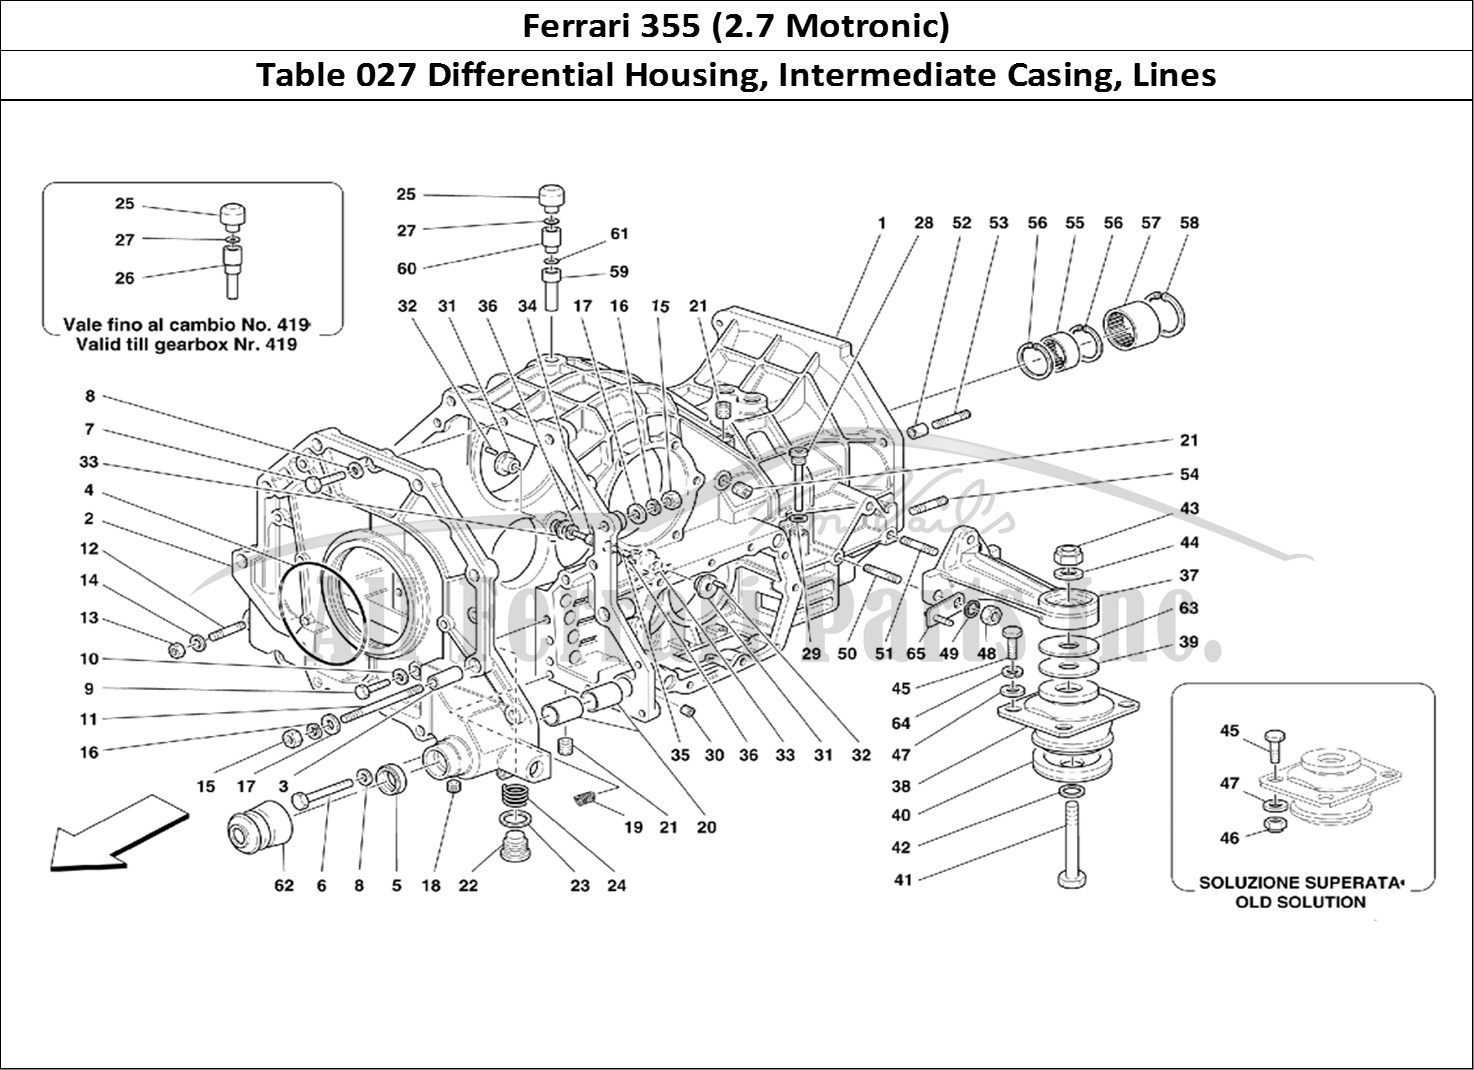 Ferrari Parts Ferrari 355 (2.7 Motronic) Page 027 Gearbox - Differential Ho